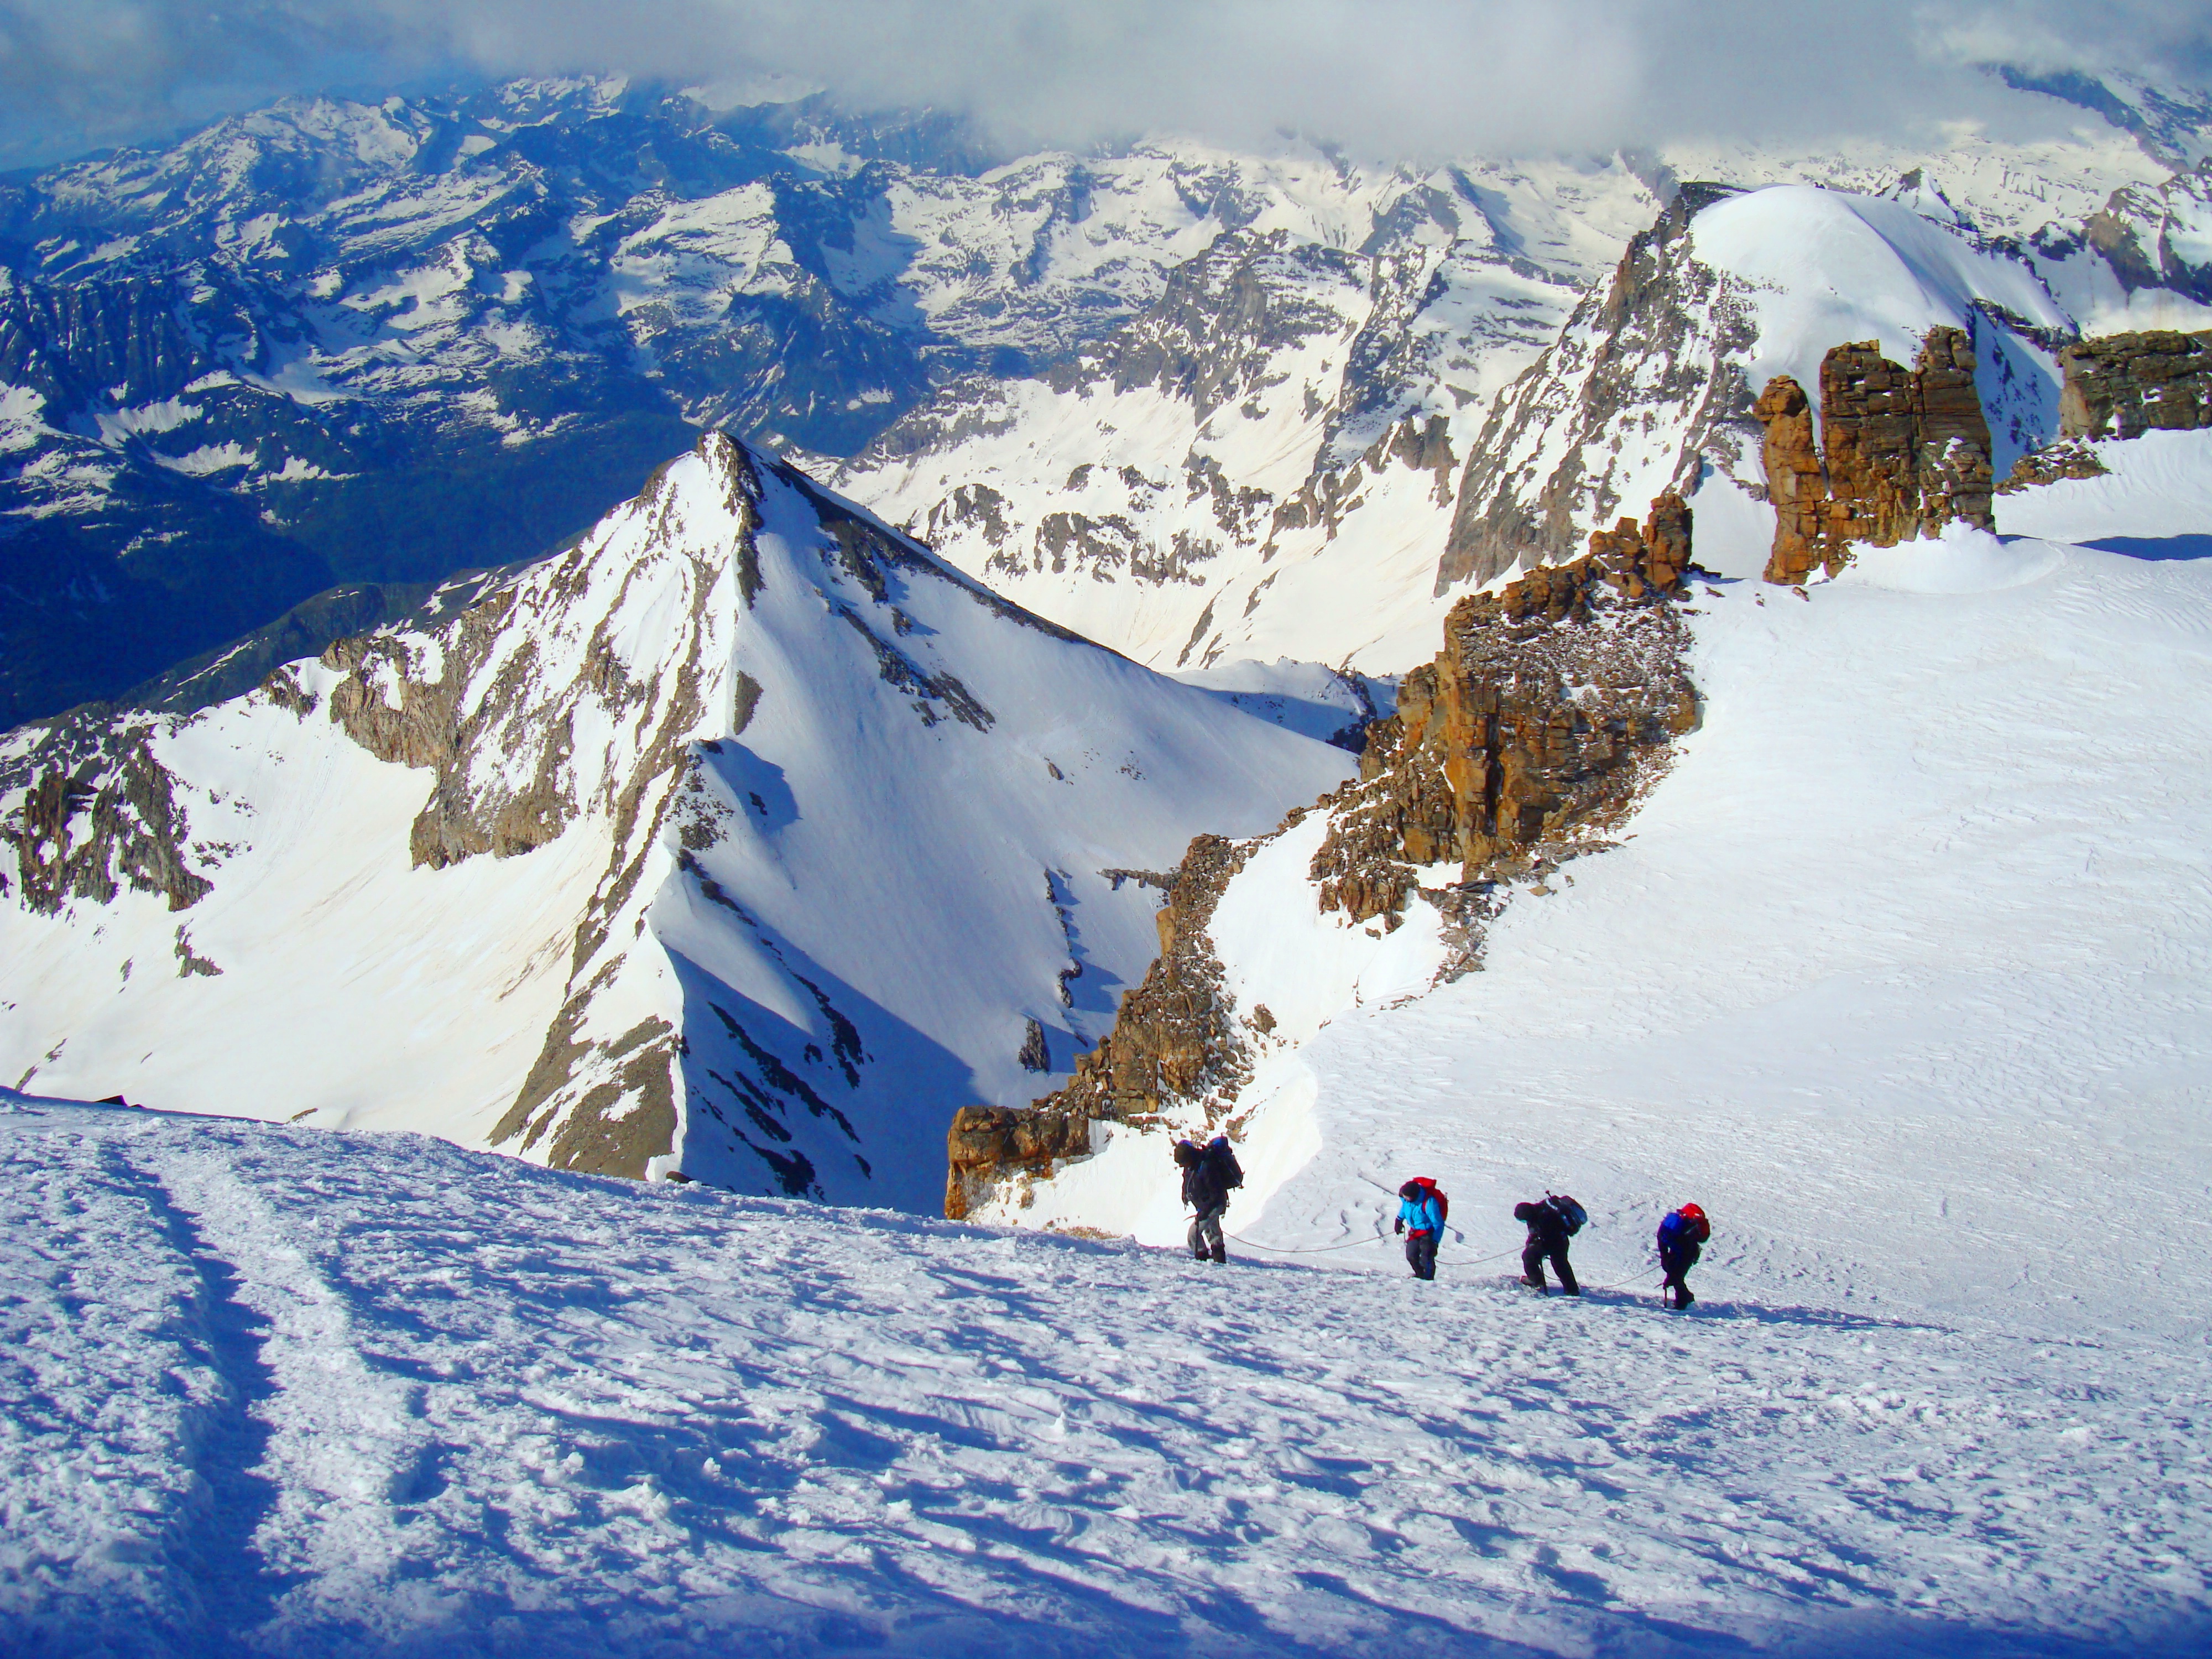 Moving towards the summit of Gran Paradiso